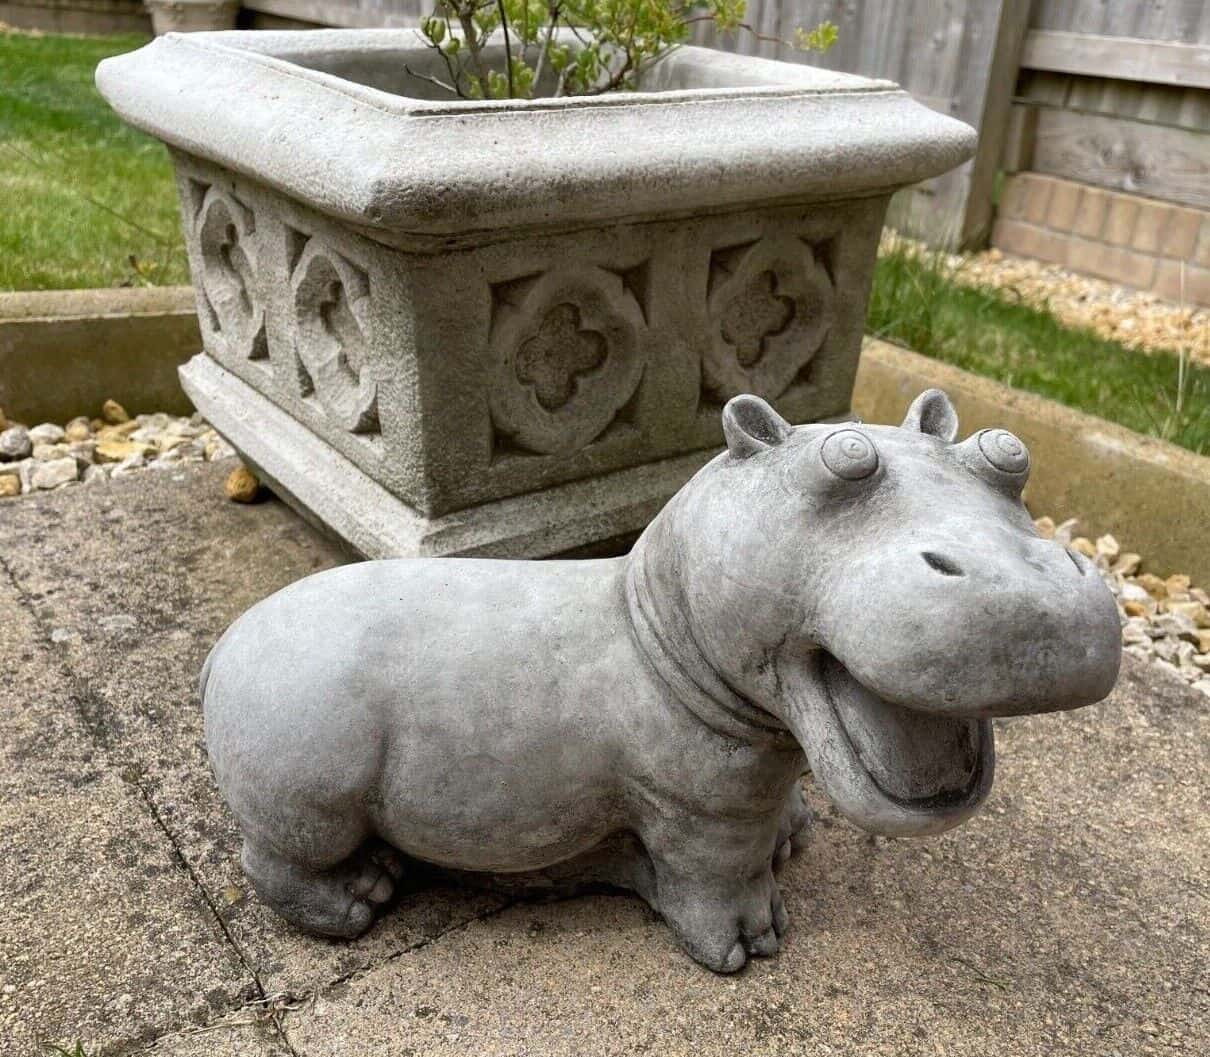 A hippopotamus standing on the patio of a British garden